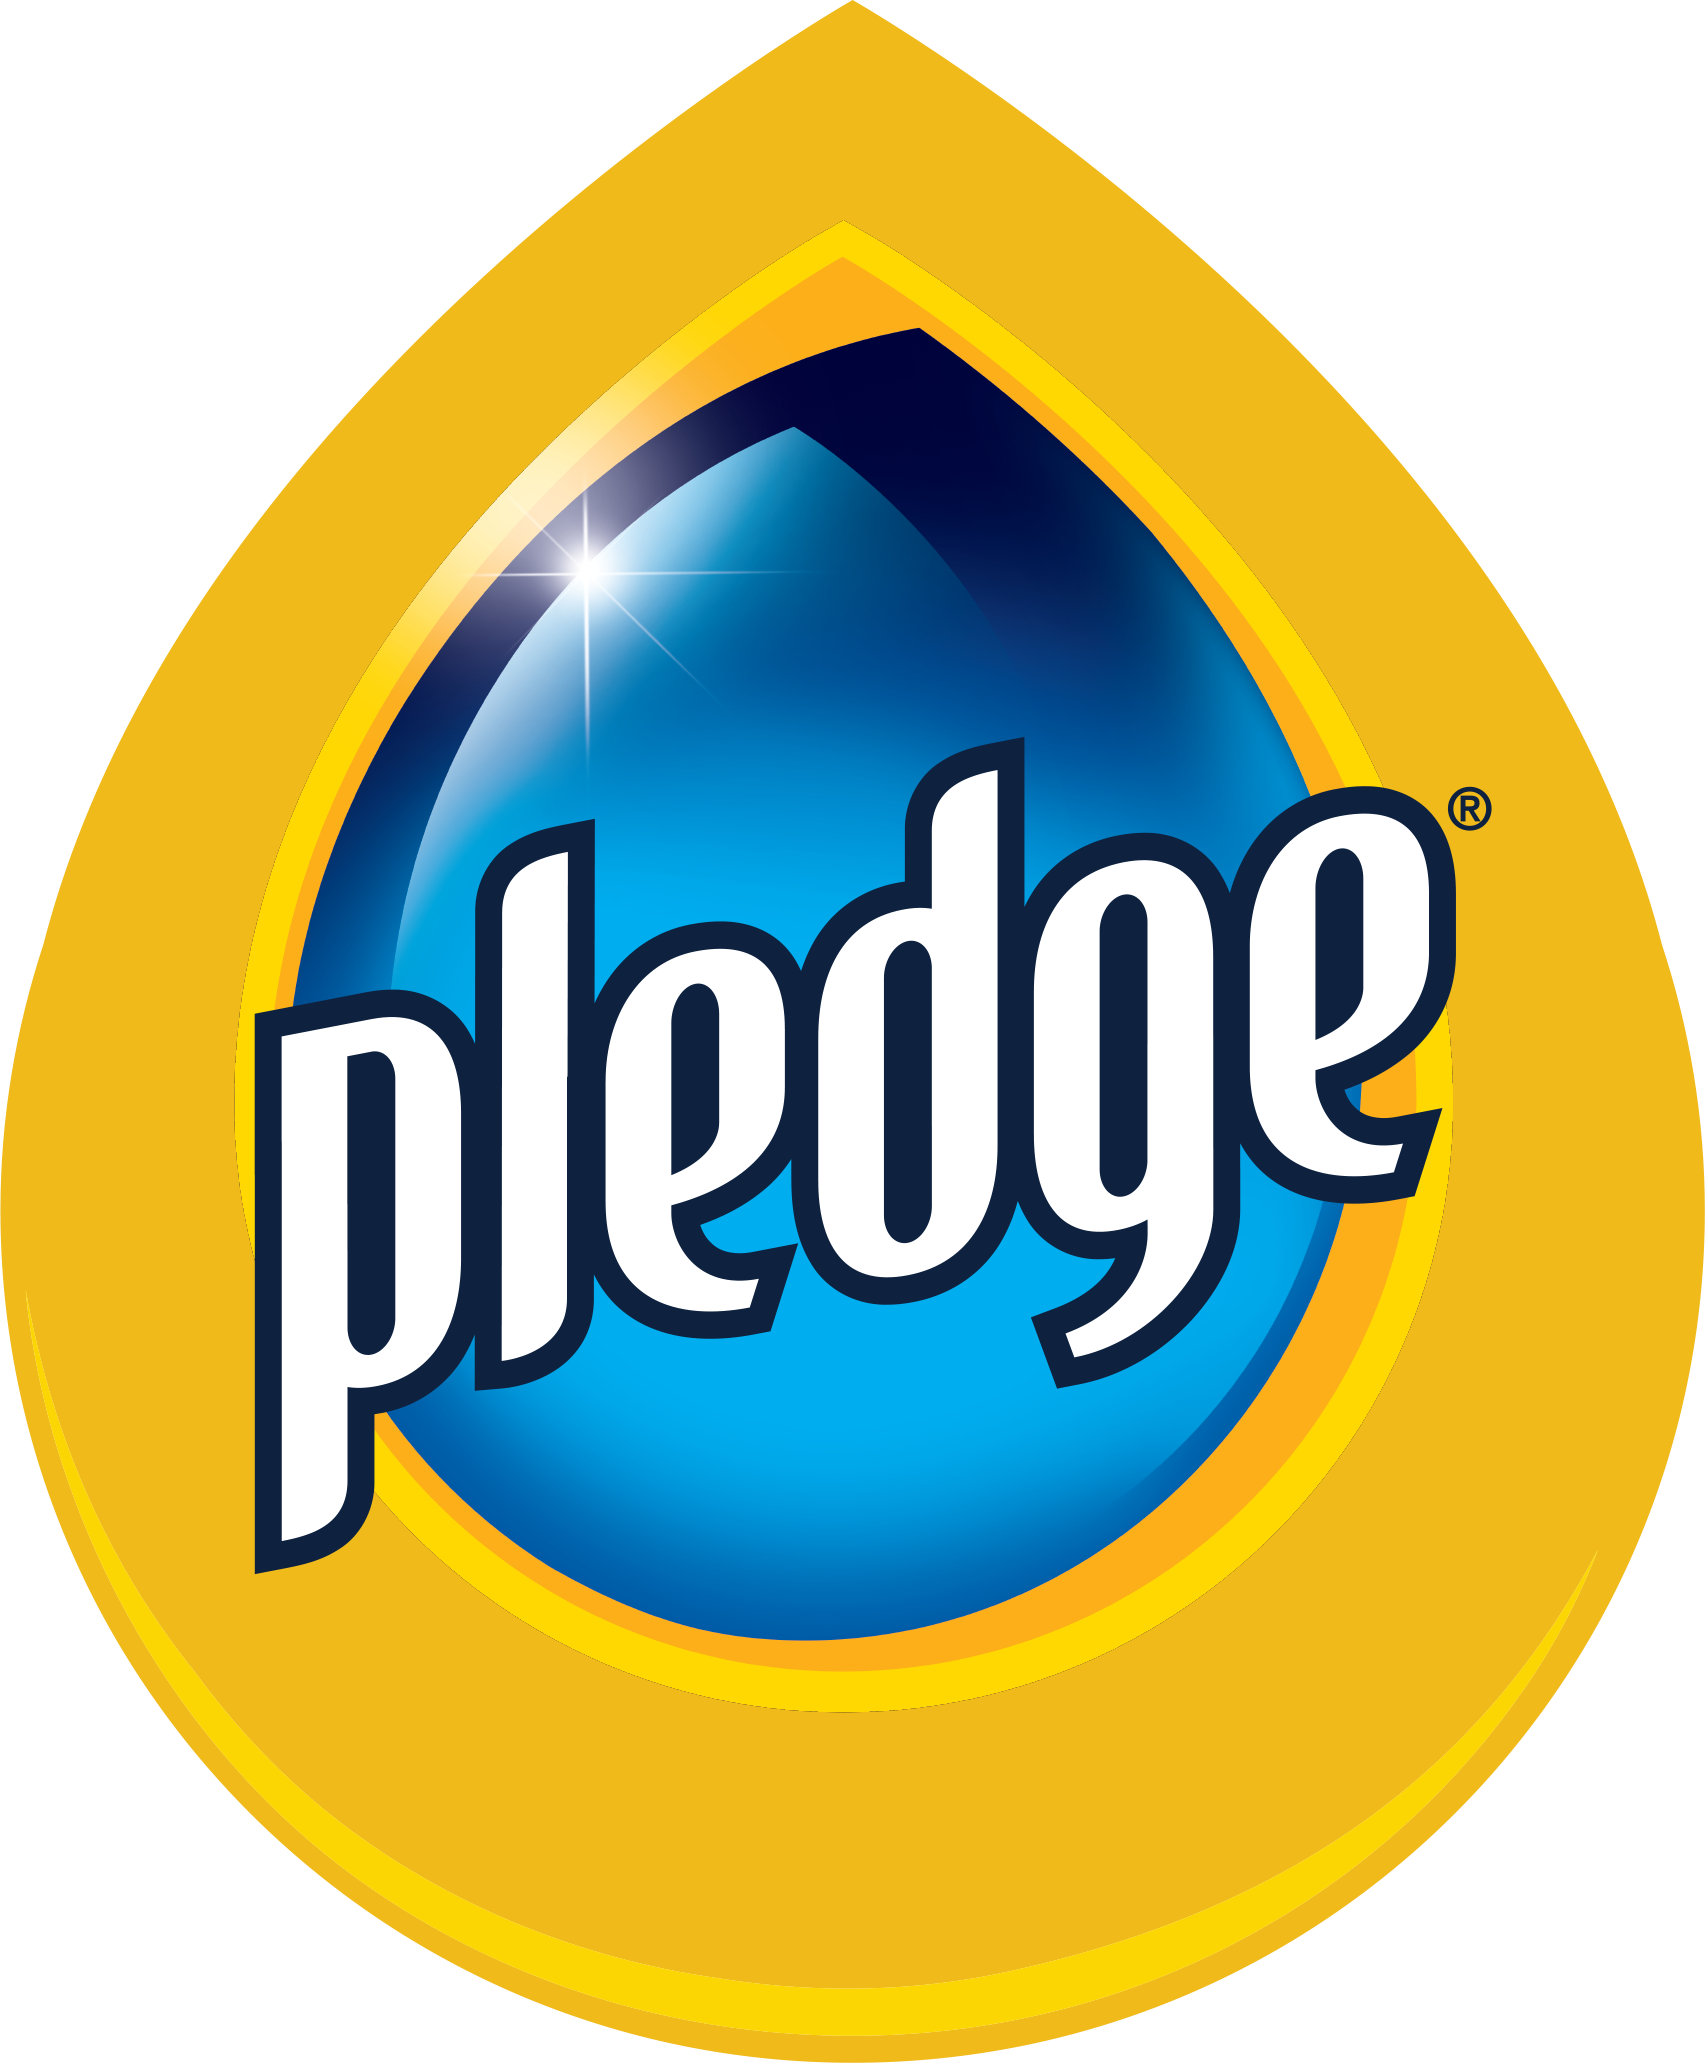 The original yellow Pledge logo.